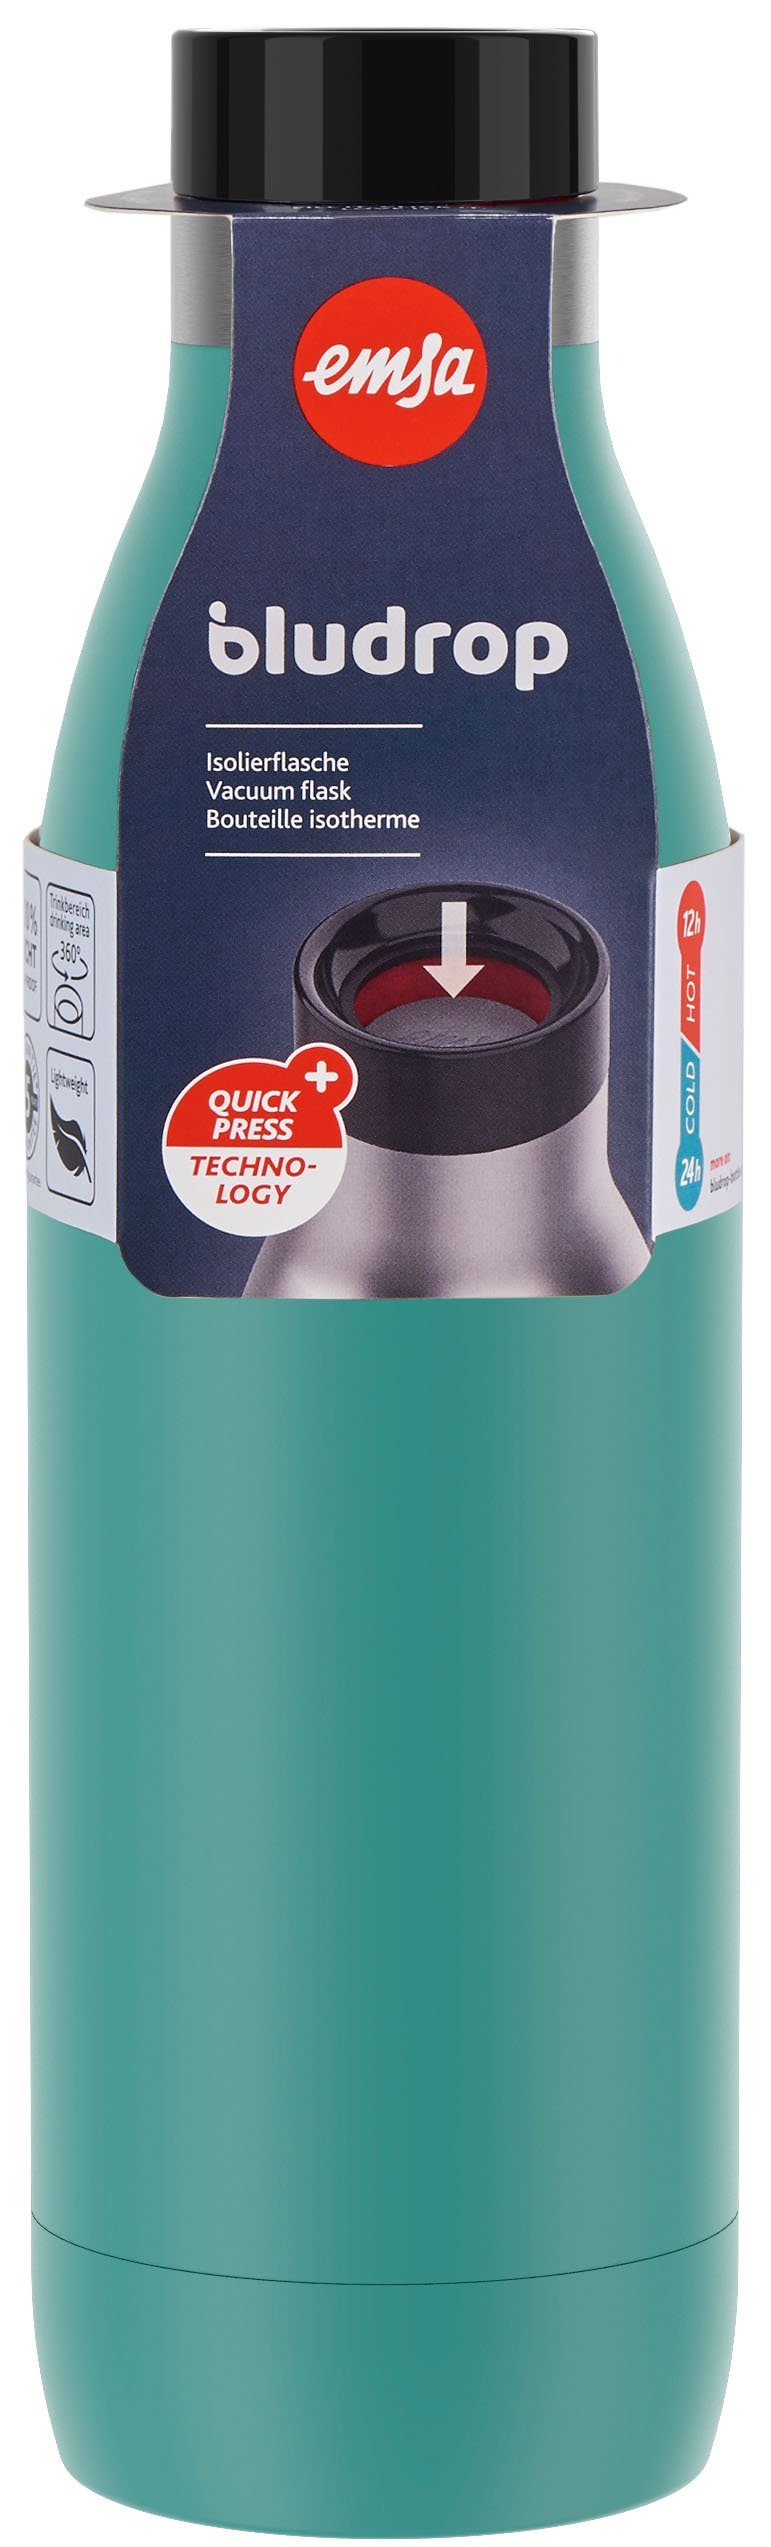 Emsa Trinkflasche Color, 12h Edelstahl, spülmaschinenfest warm/24h Bludrop Quick-Press petrol kühl, Deckel